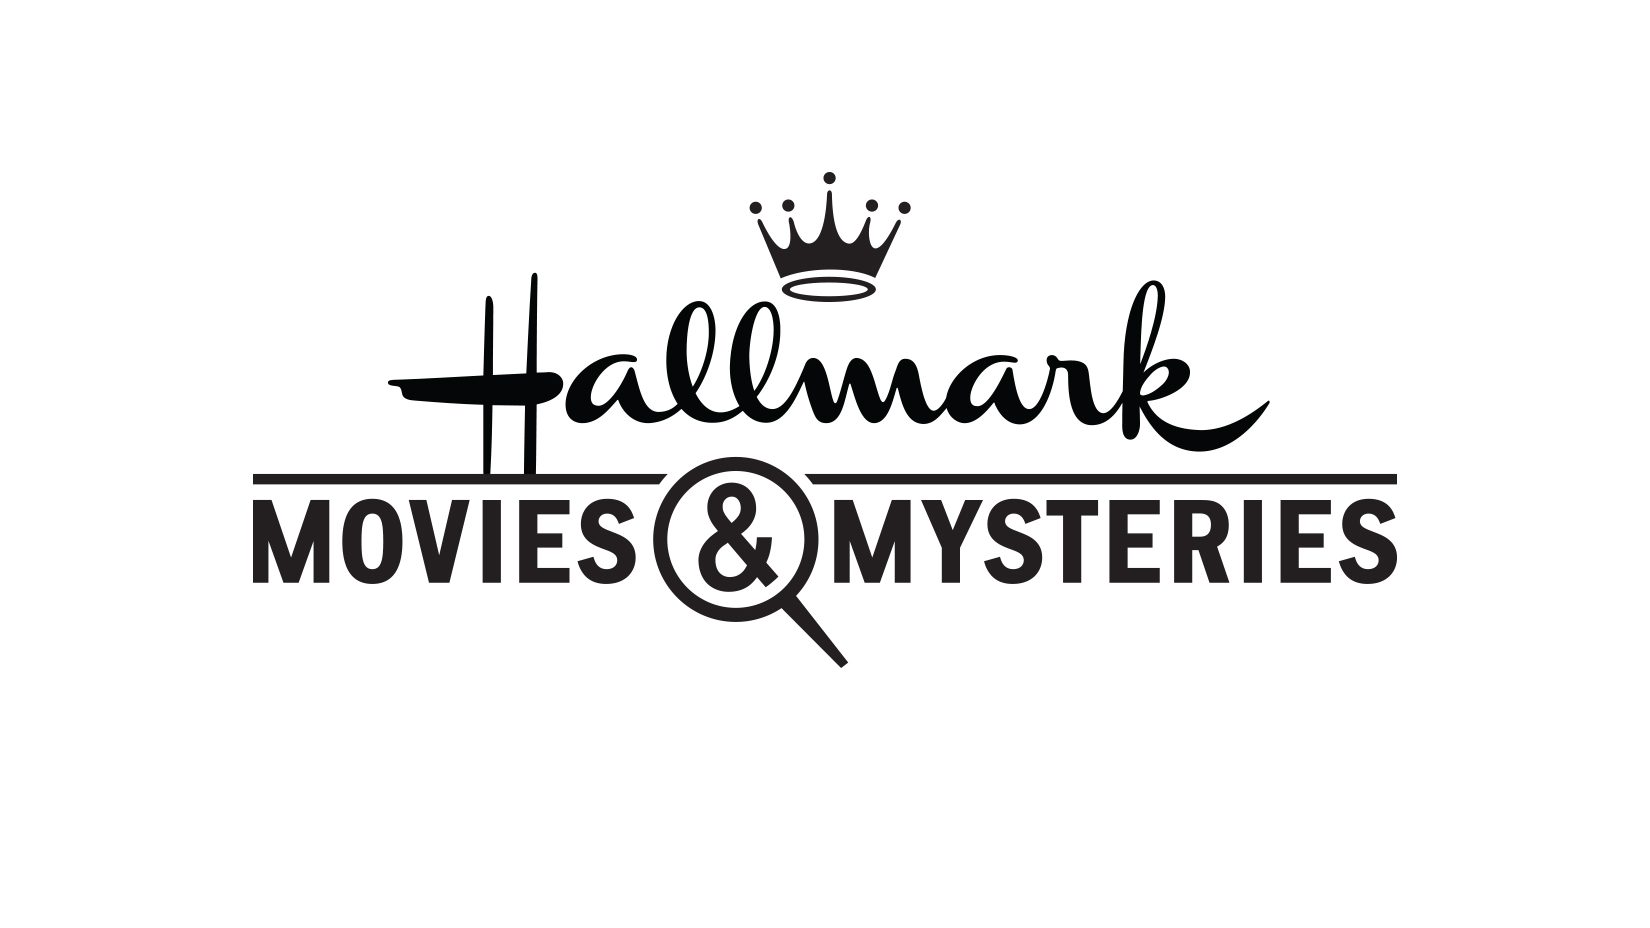 How to Watch Hallmark Movies & Mysteries Channel Online